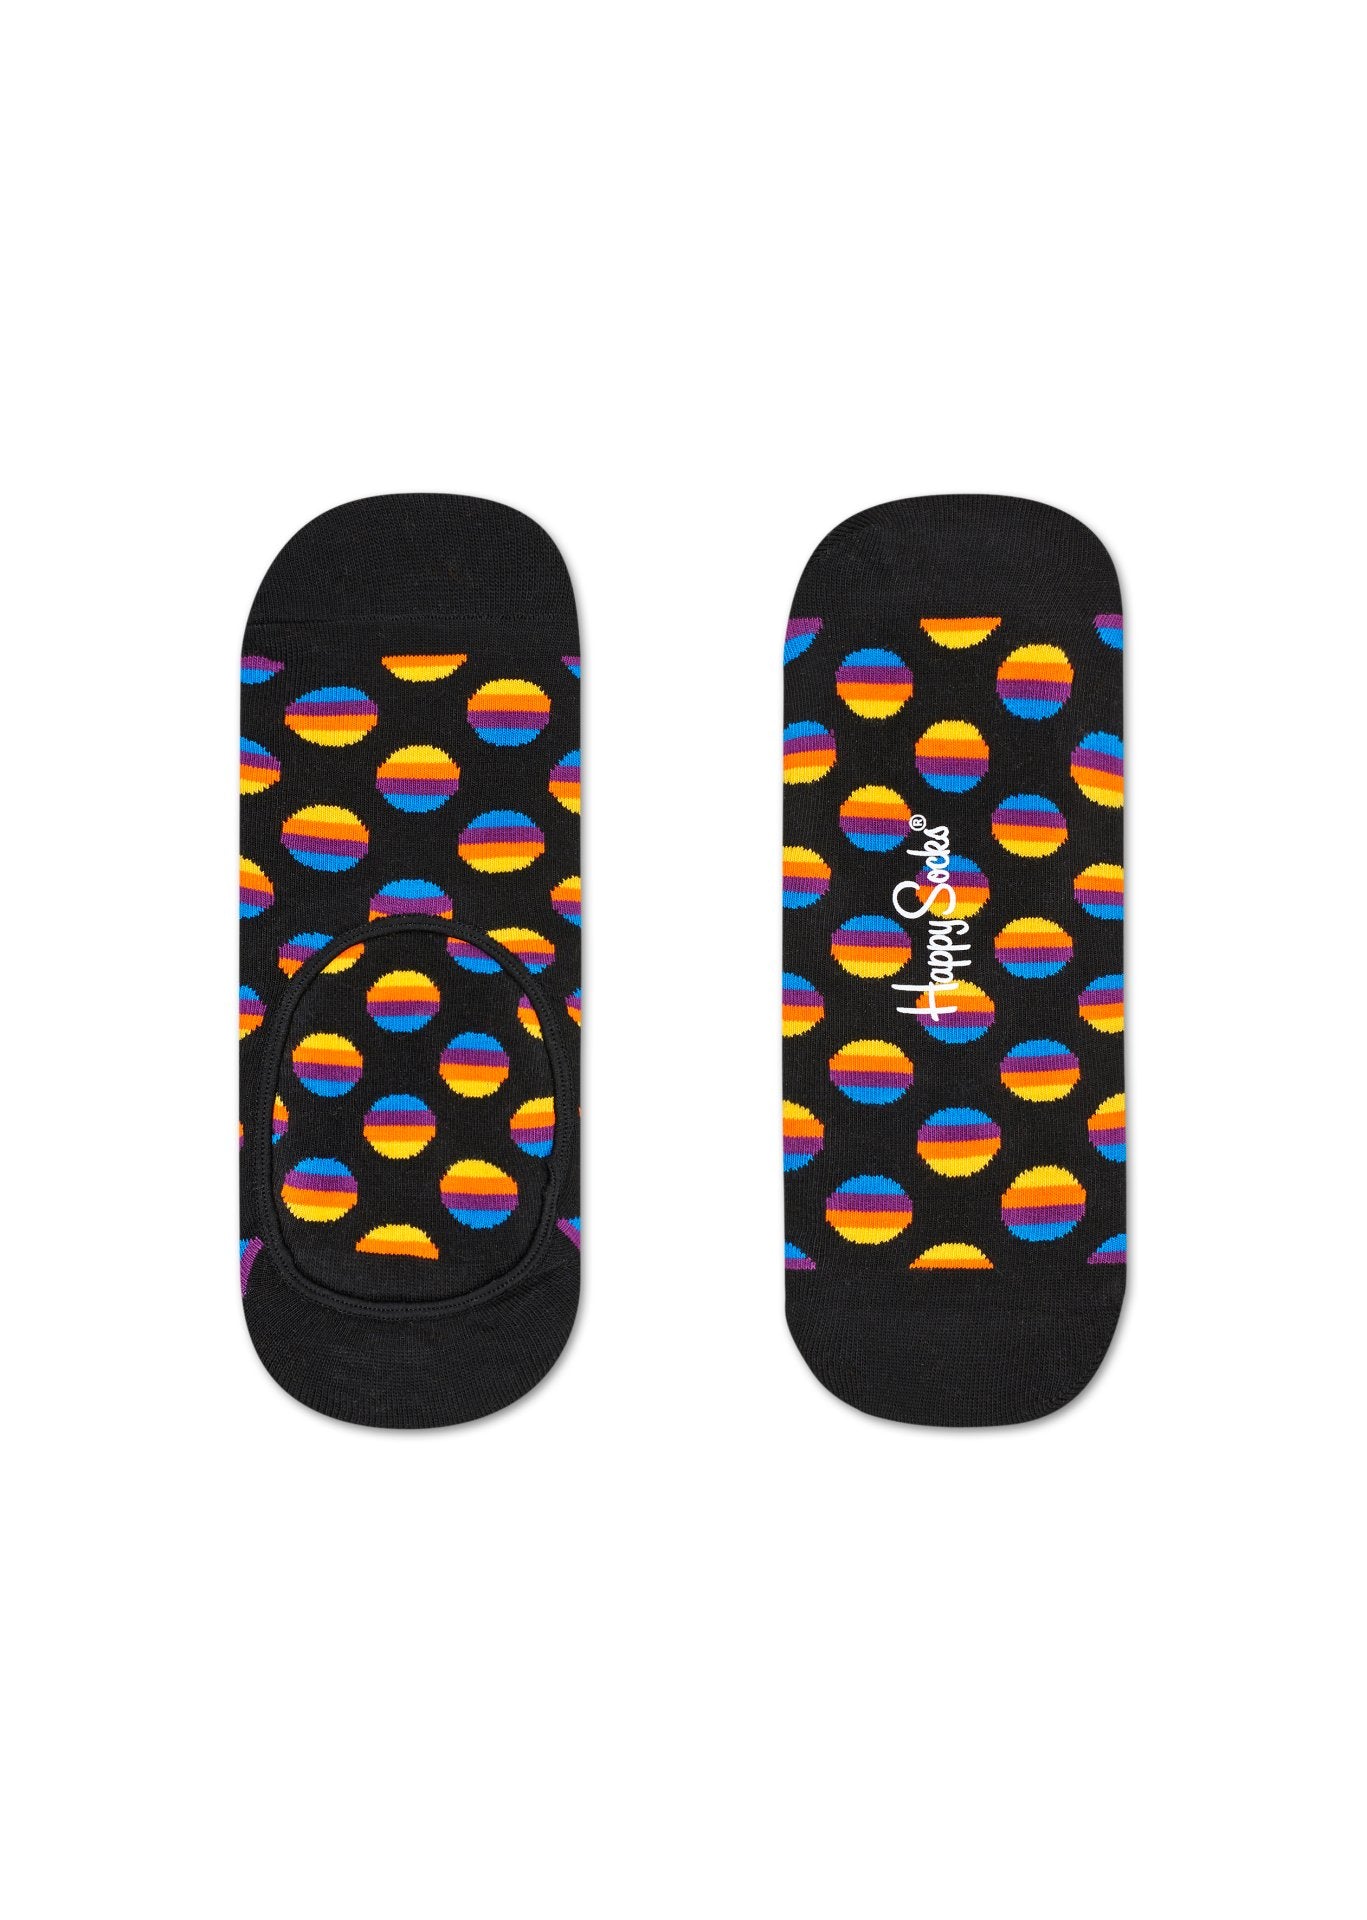 Čierne nízke ponožky Happy Socks, vzor Sunriso Dot